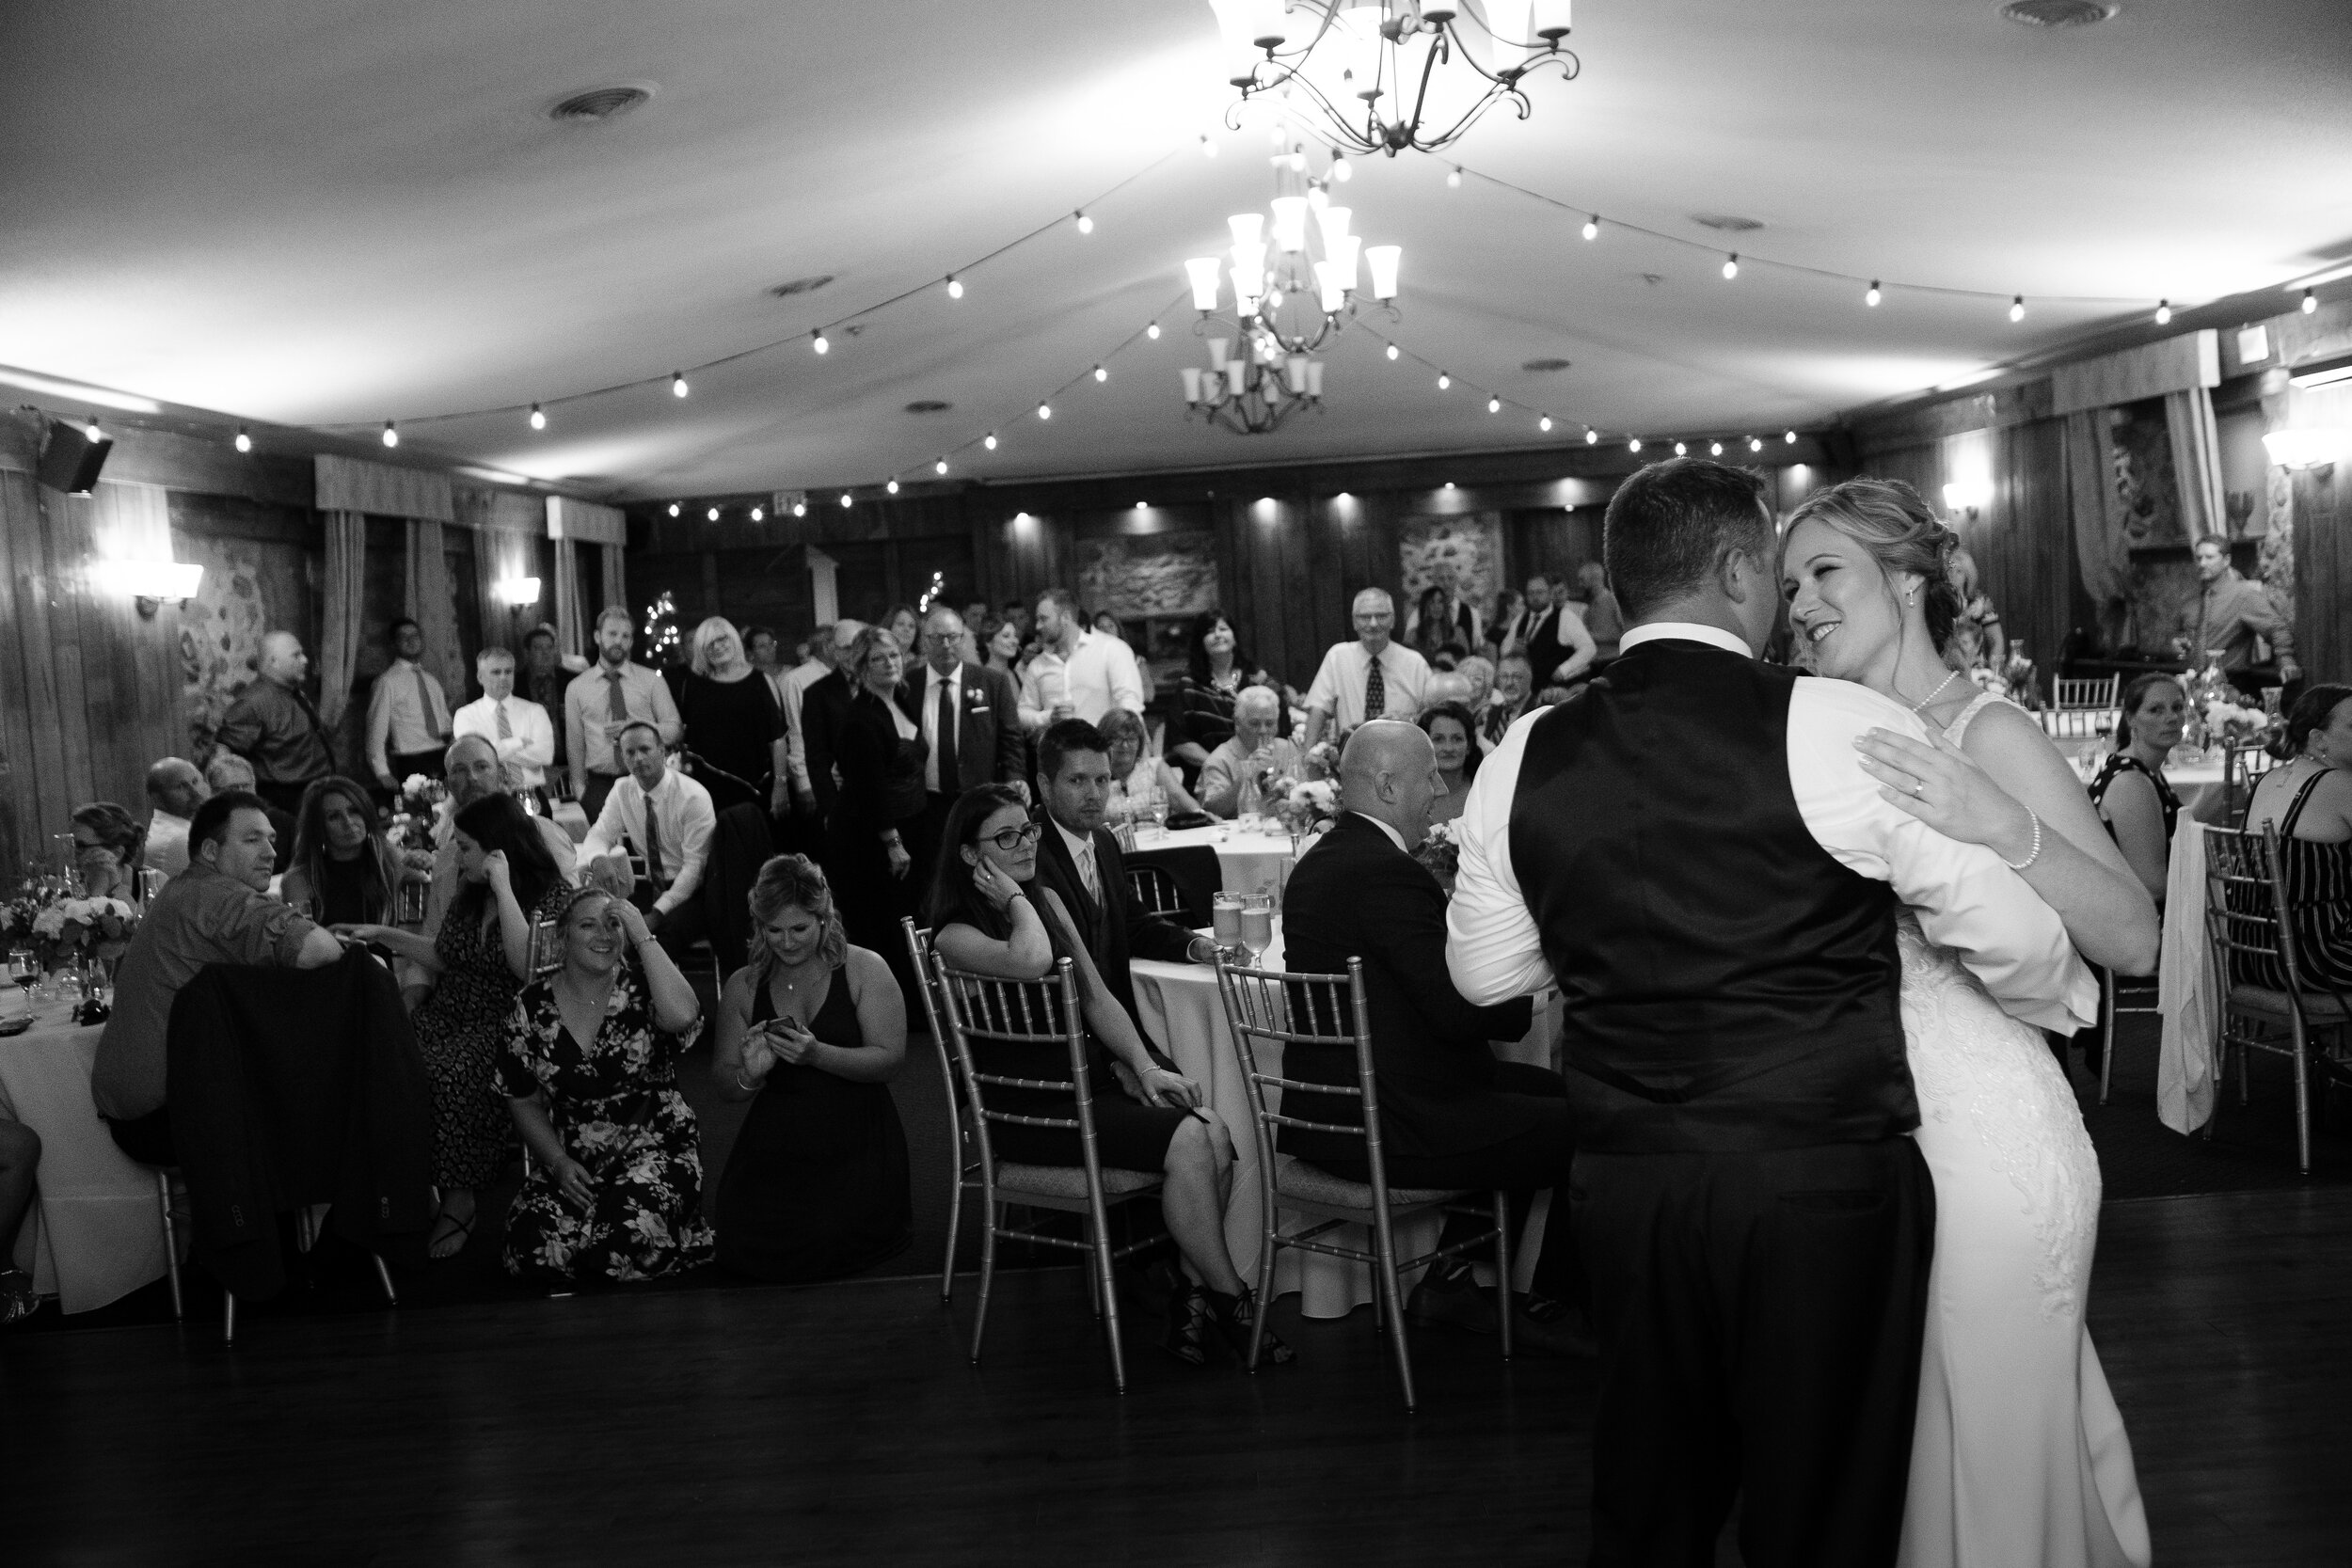  Amanda + Chad enjoy their first dance during their wedding reception at the Hessenland Country Inn by Toronto wedding photographer Scott Williams. 